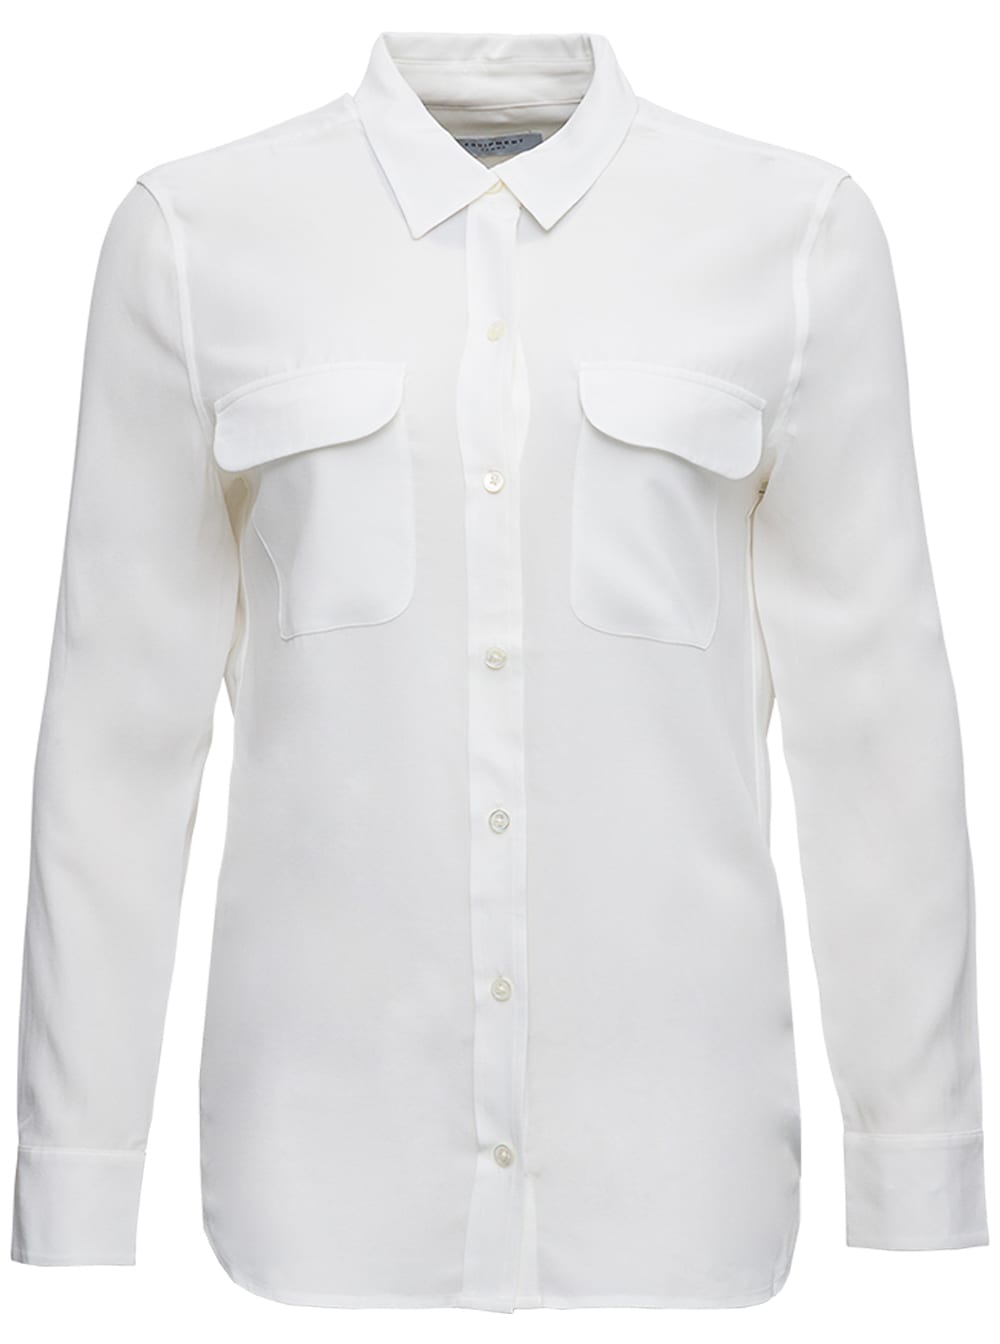 Equipment White Silk Shirt With Pockets